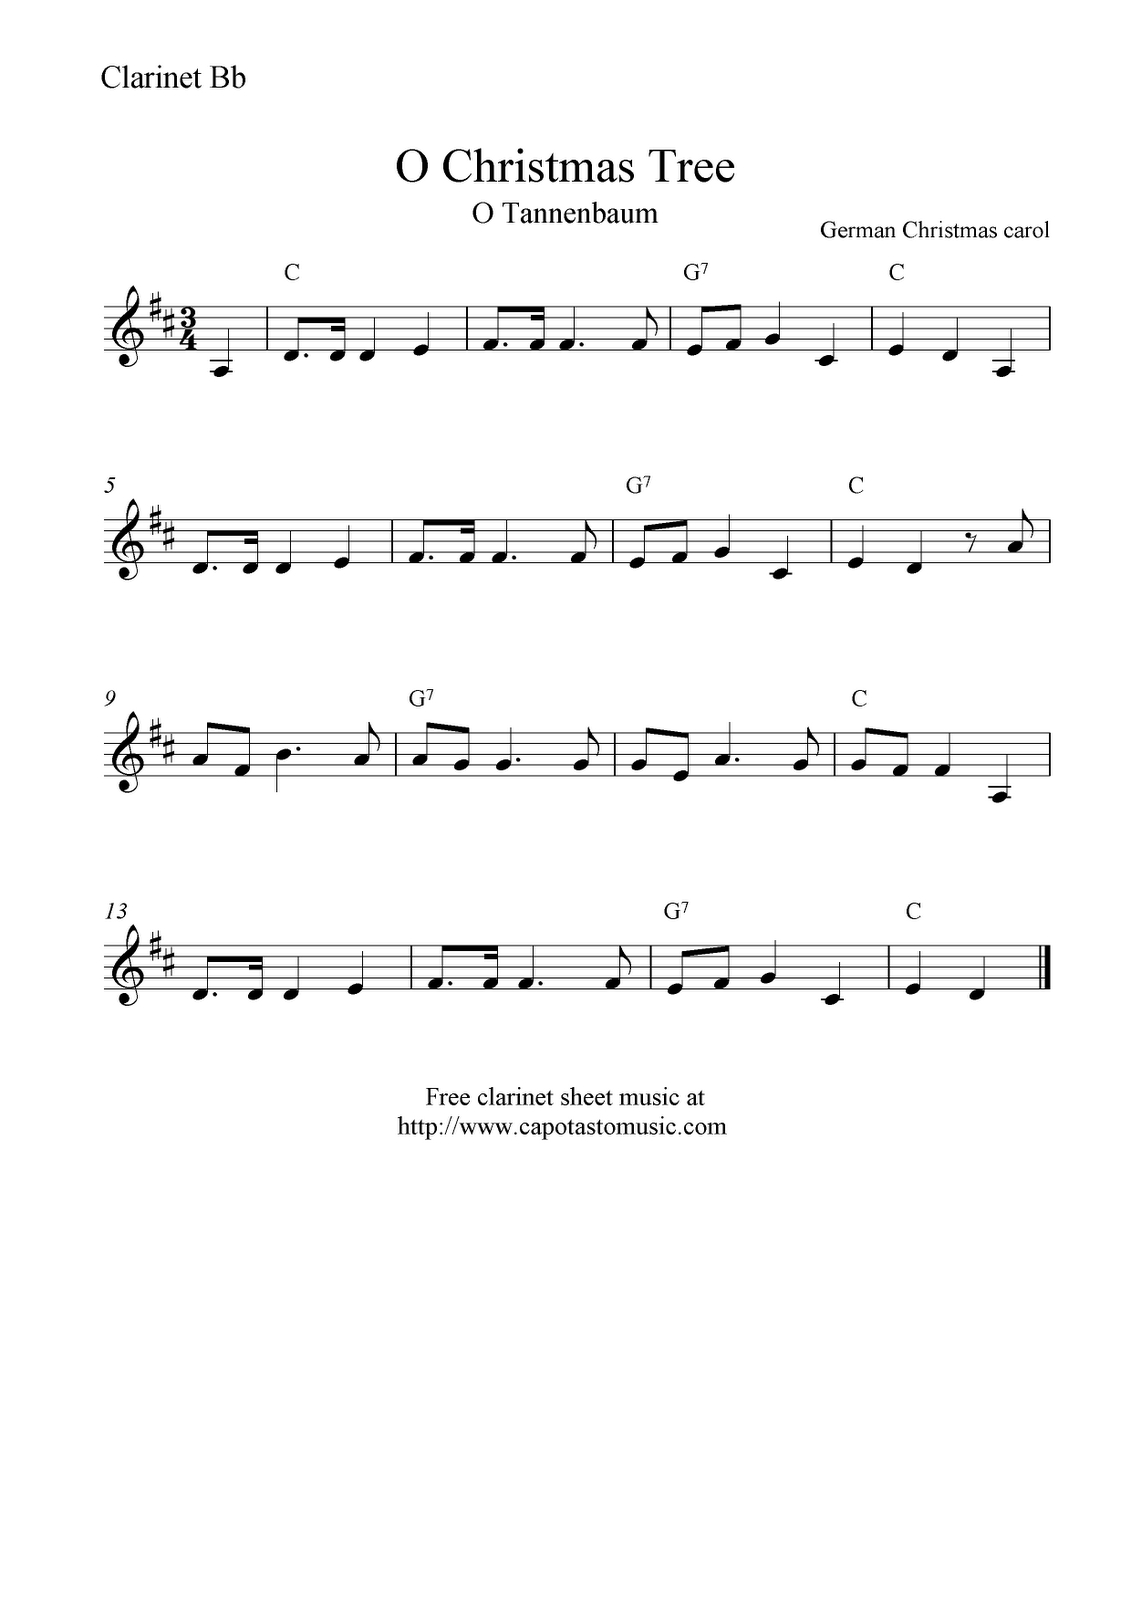 Free Sheet Music Scores: O Christmas Tree (O Tannenbaum), Free - Free Printable Clarinet Music